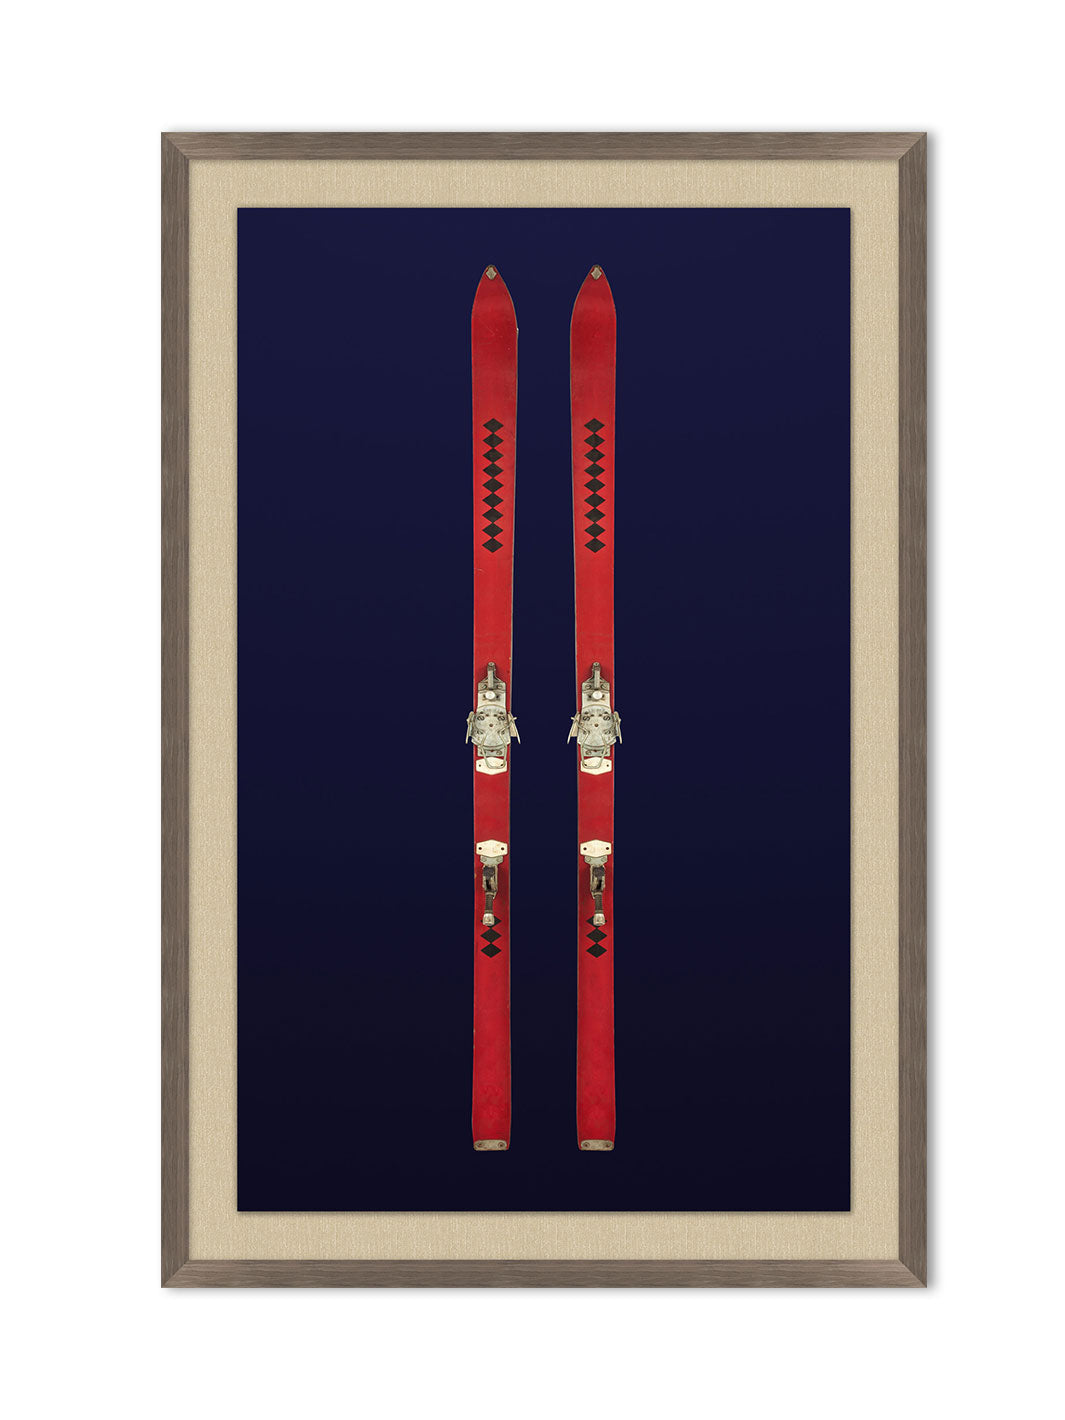 'Antique Skis Navy 2' by Nathan Turner Framed Art